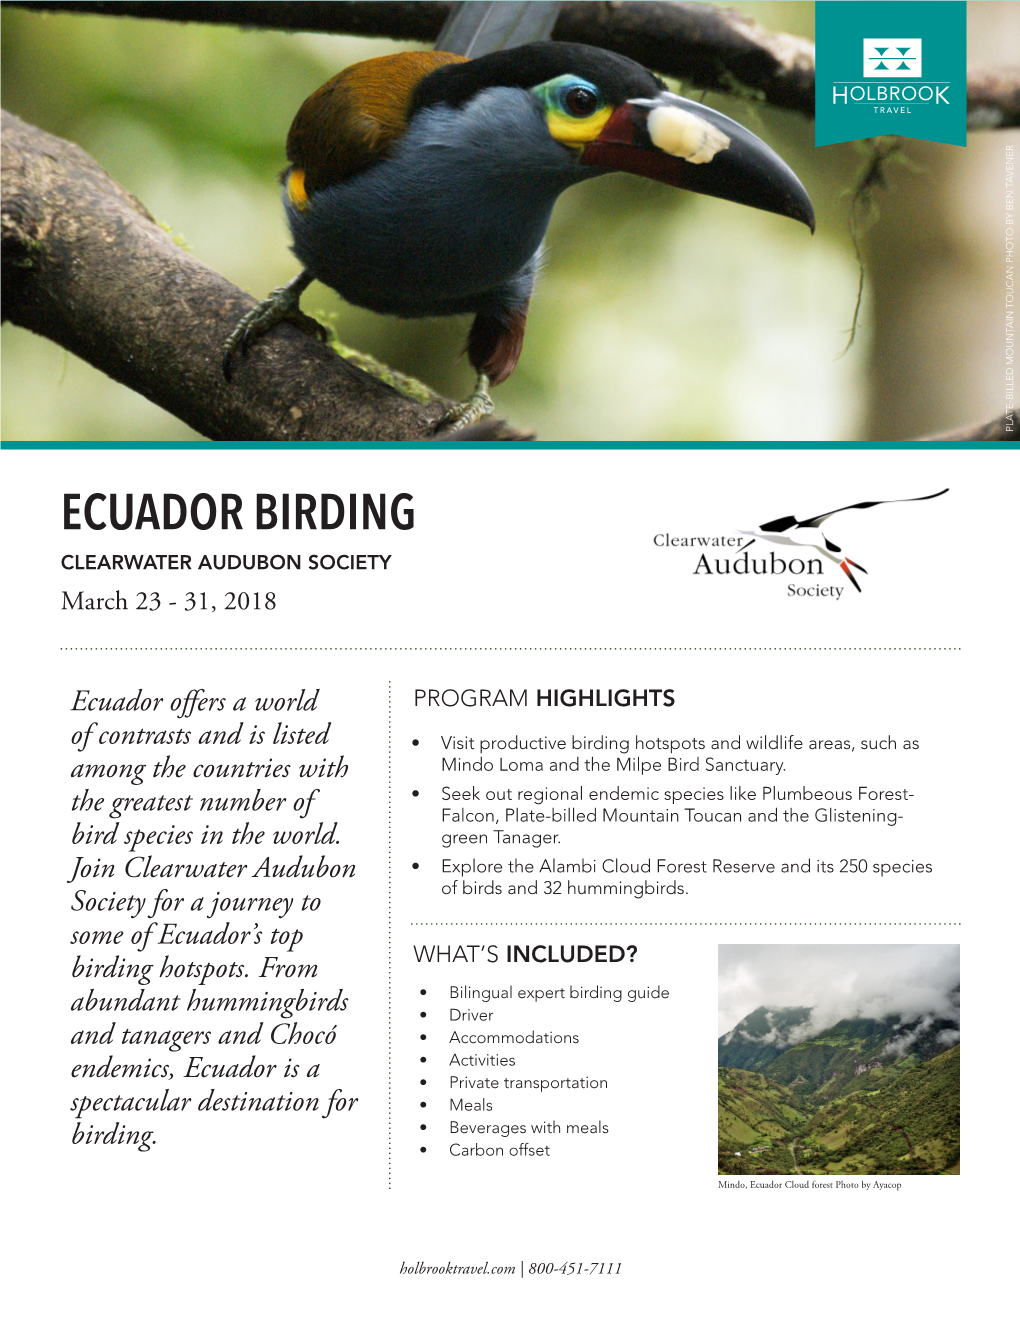 ECUADOR BIRDING CLEARWATER AUDUBON SOCIETY March 23 - 31, 2018